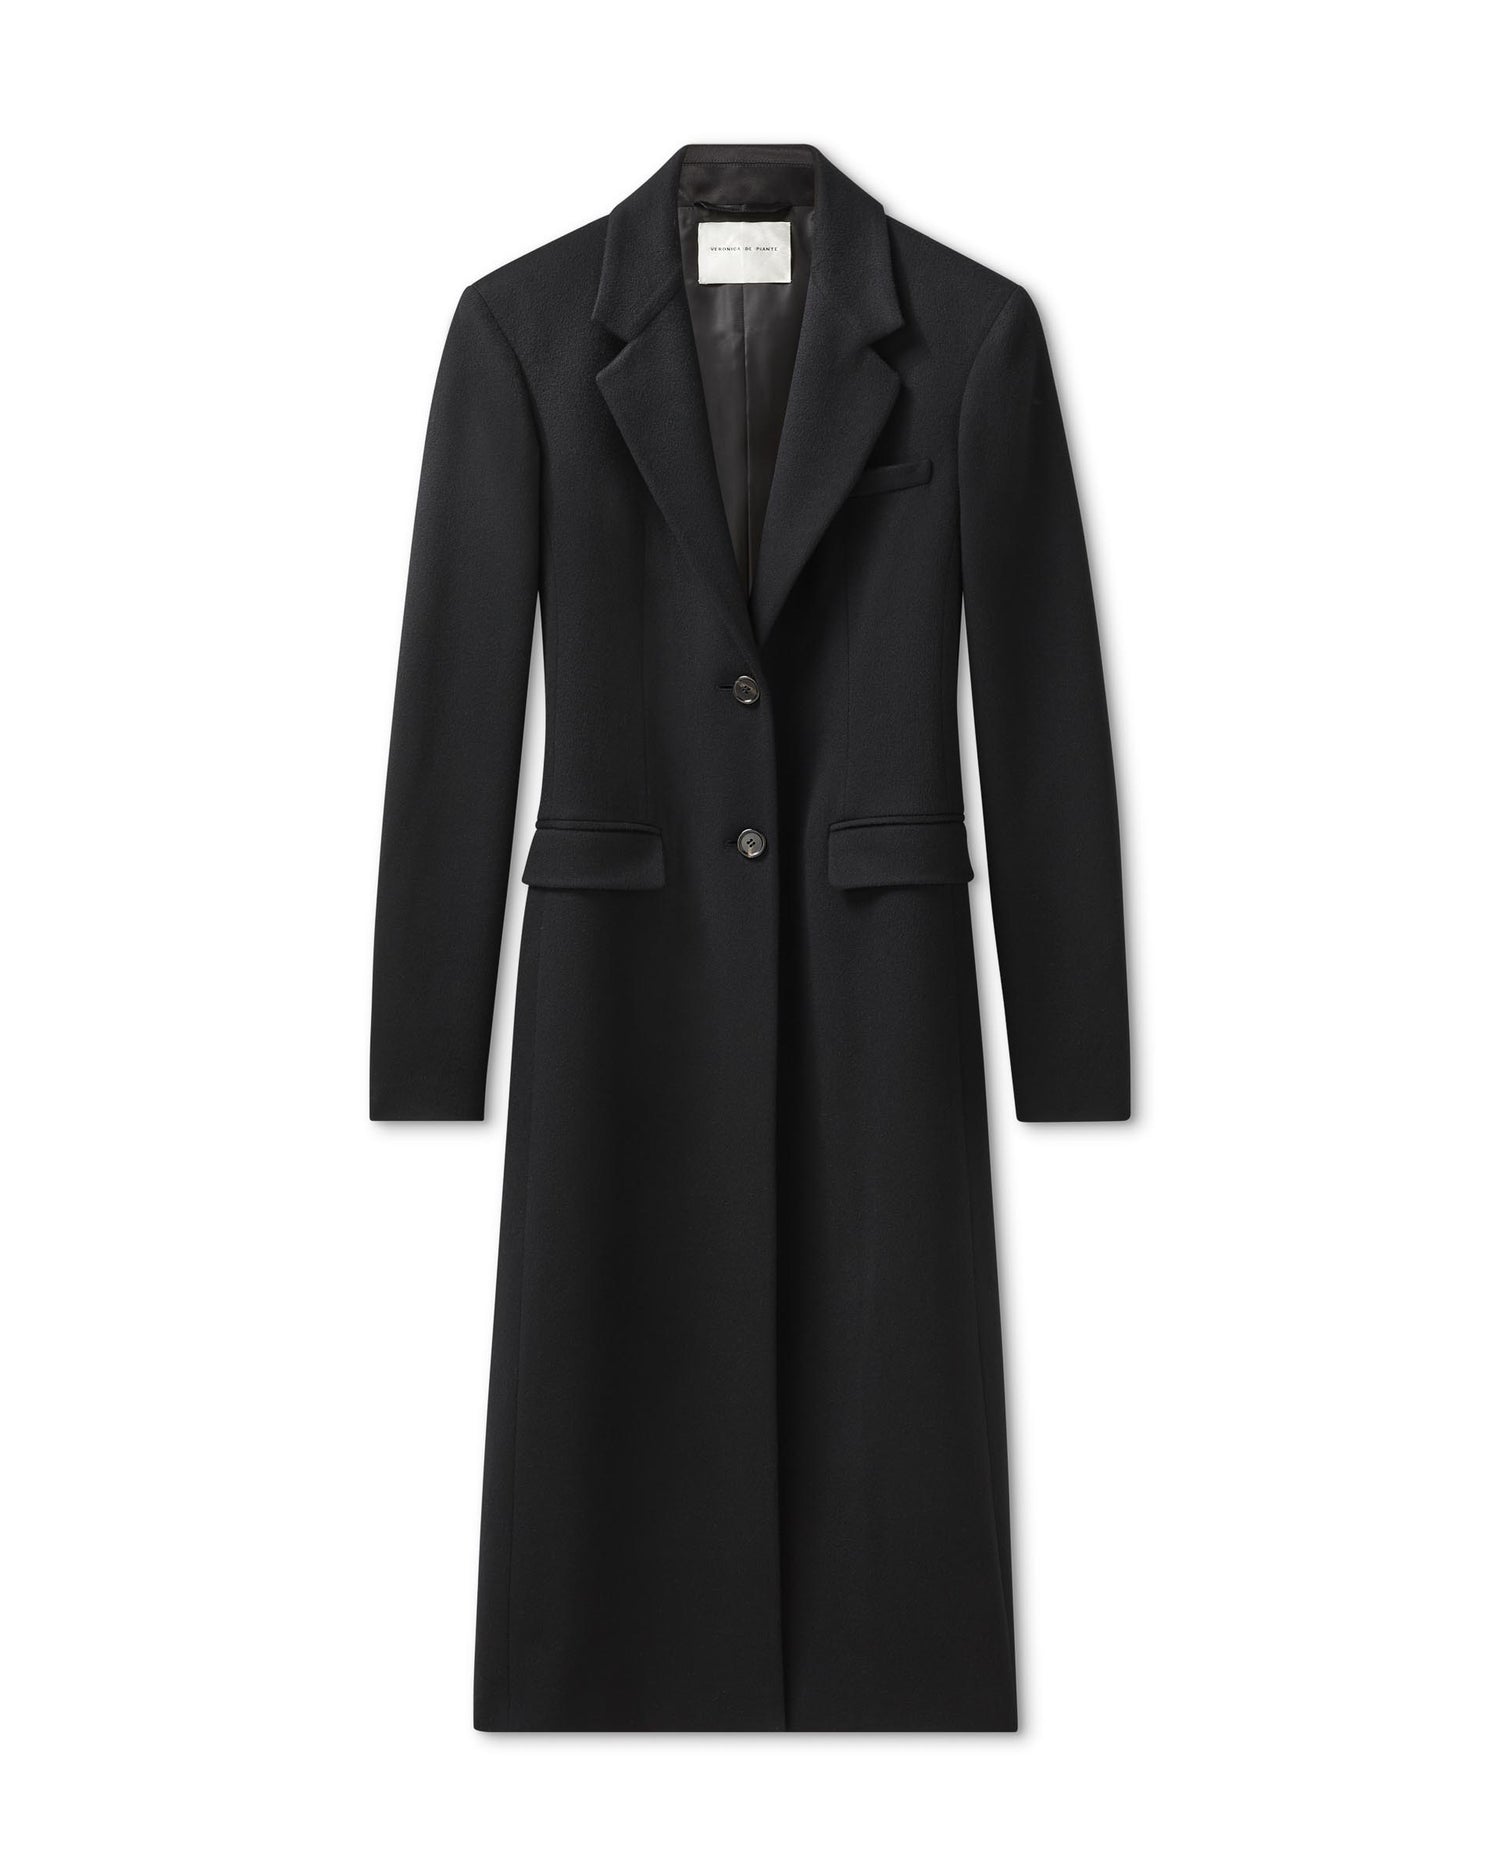 Freya Coat in Cashmere, Black